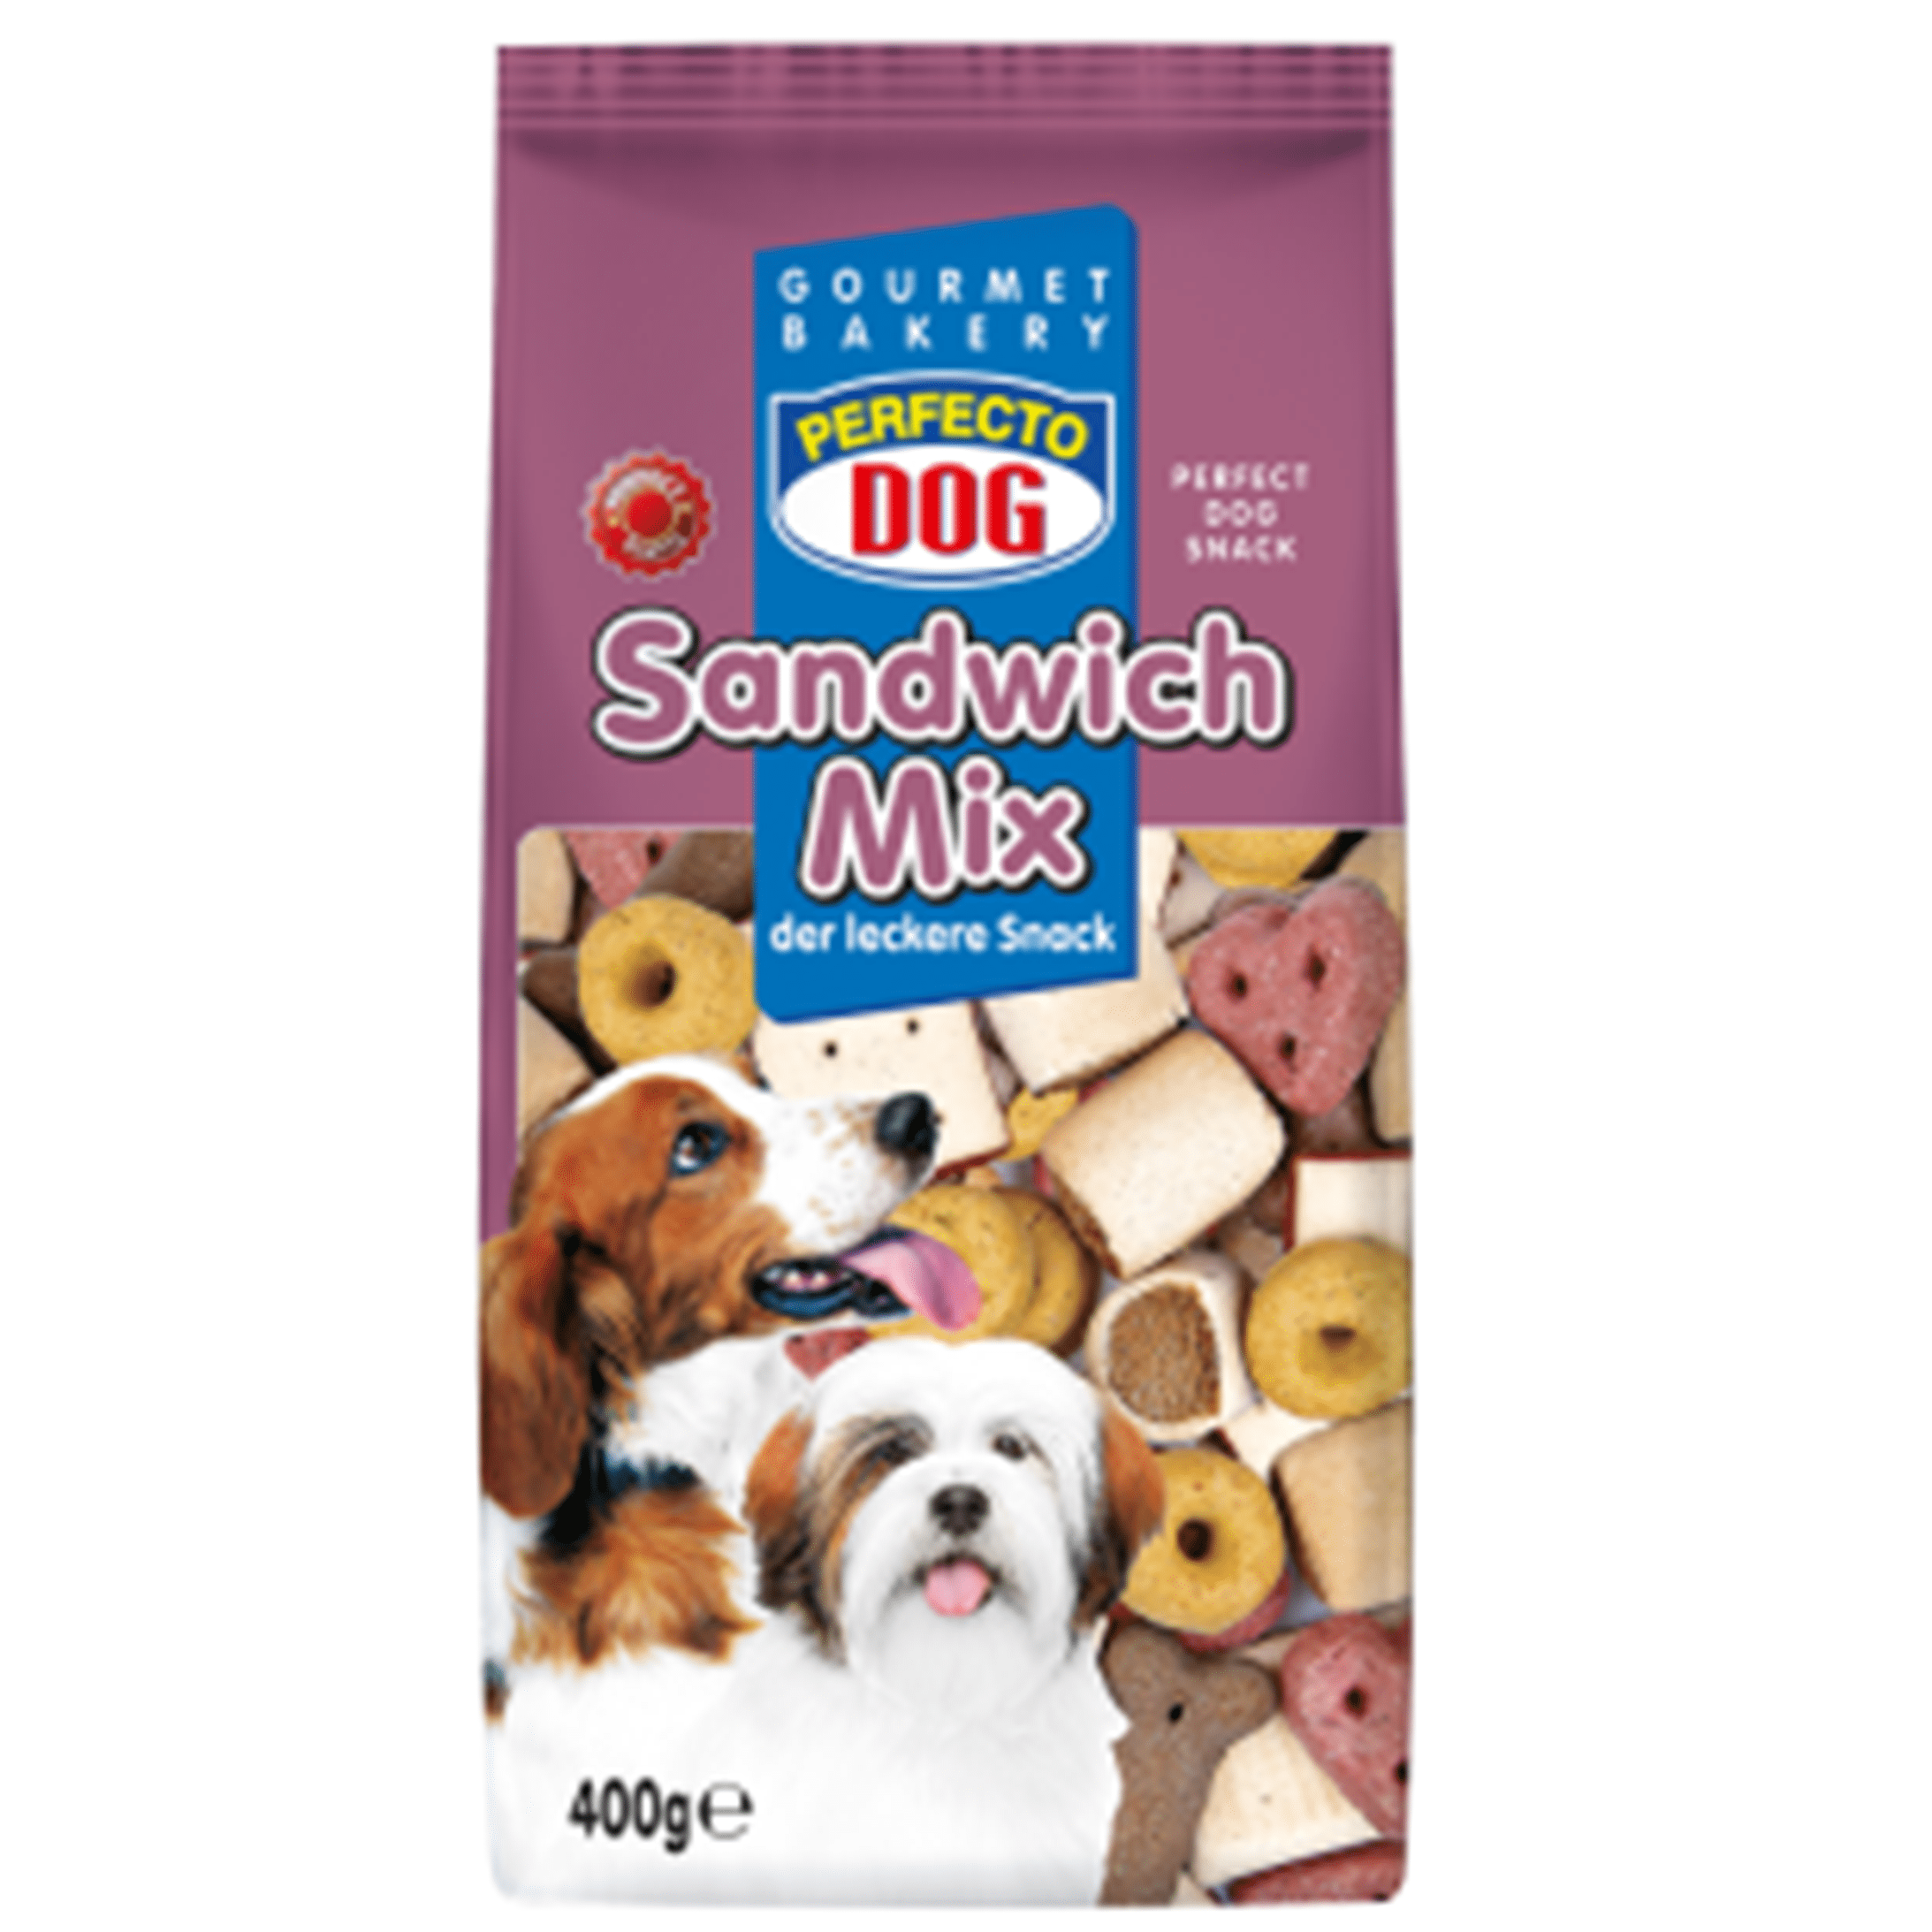 Perfecto Dog Sandwich-Mix 400g - Amin Pet Shop